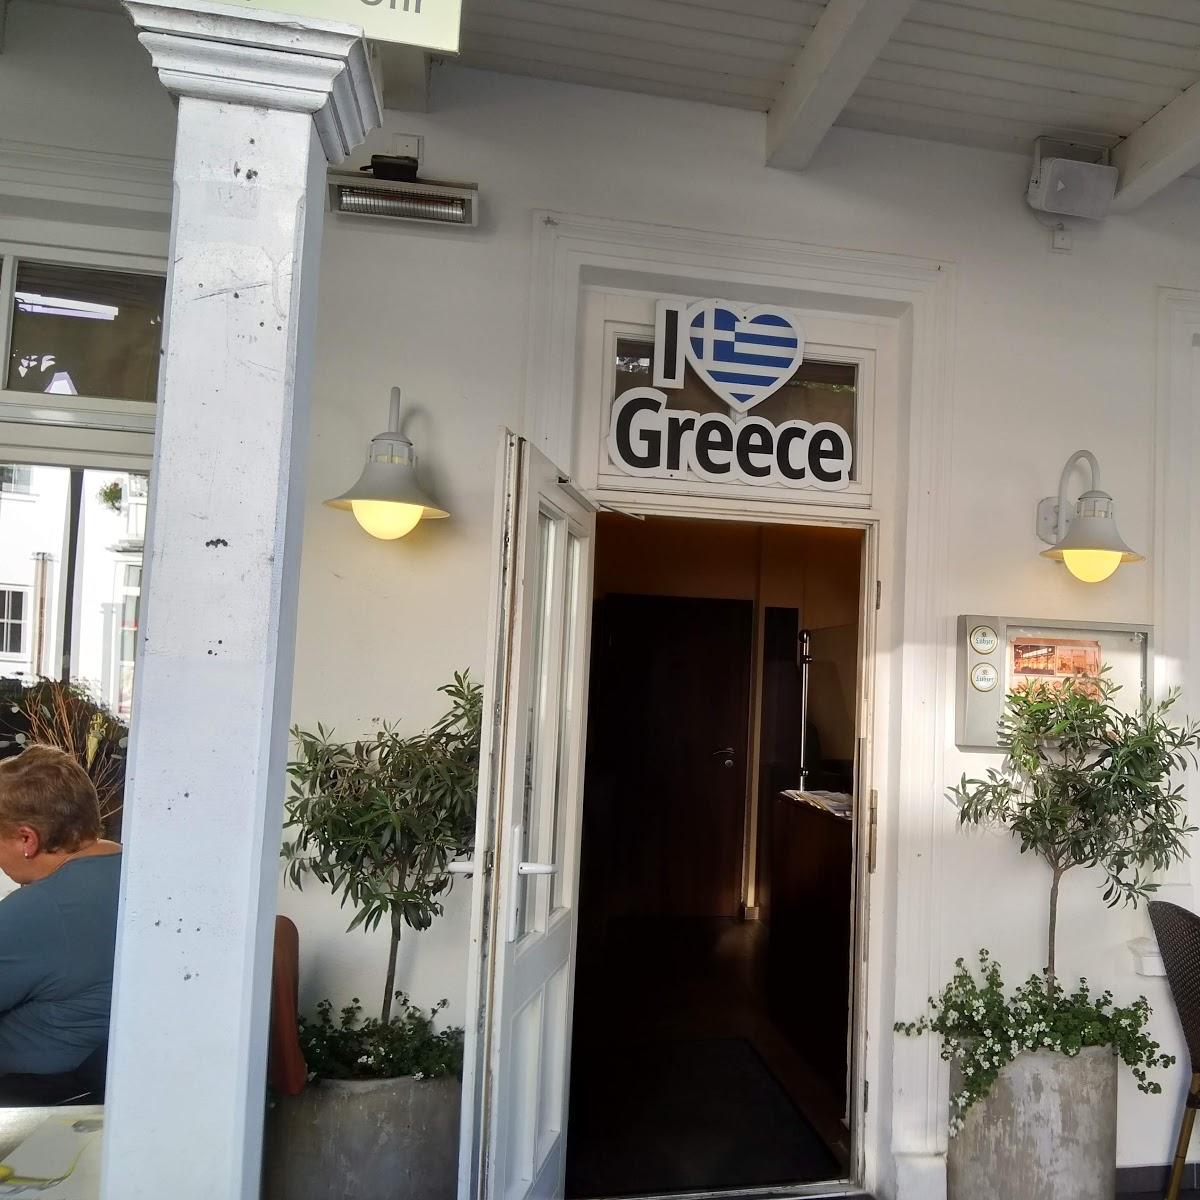 Restaurant "El Greco" in  Binz